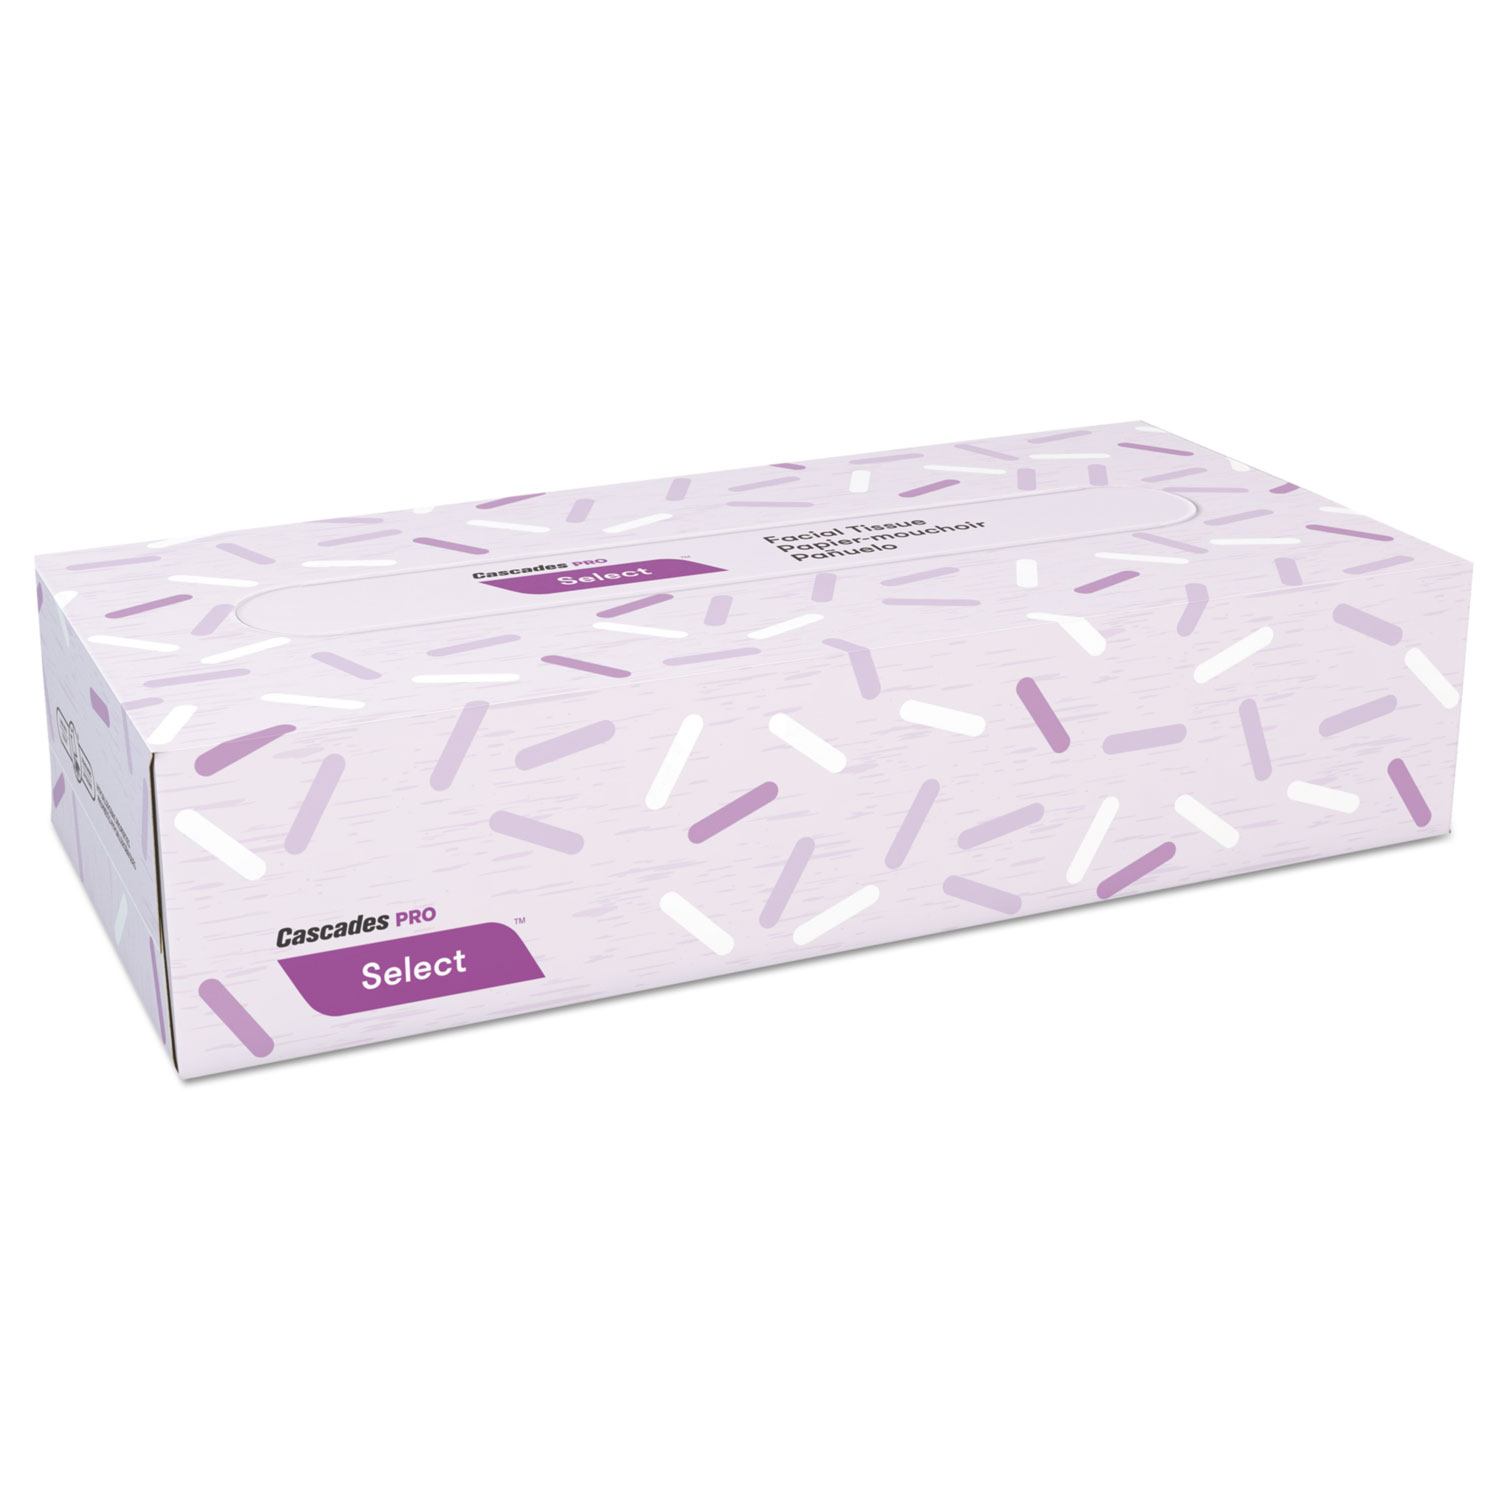  Cascades PRO F150 Select Flat Box Facial Tissue, 2-Ply, White, 100 Sheets/Box, 30 Boxes/Carton (CSDF150) 